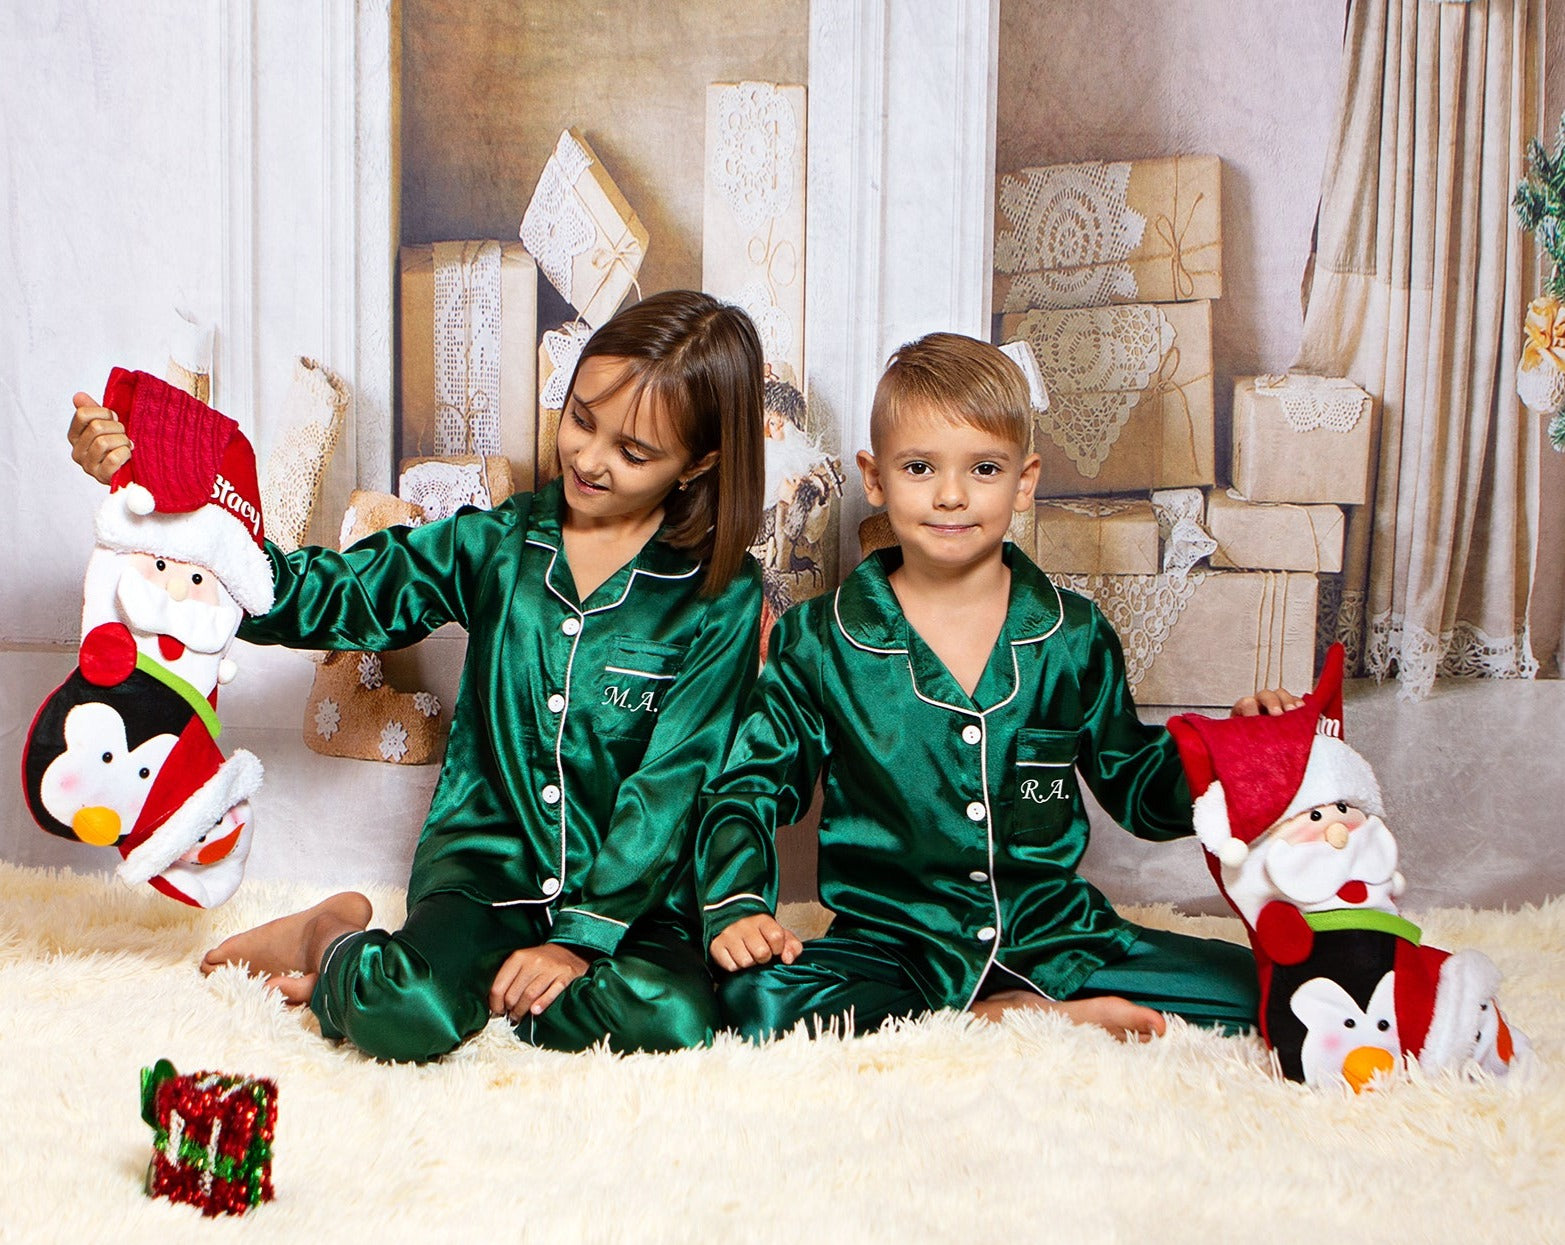 Christmas Satin Pajamas PJ's Solid Family Matching Xmas Sleepwear Pants Set  For Adults 